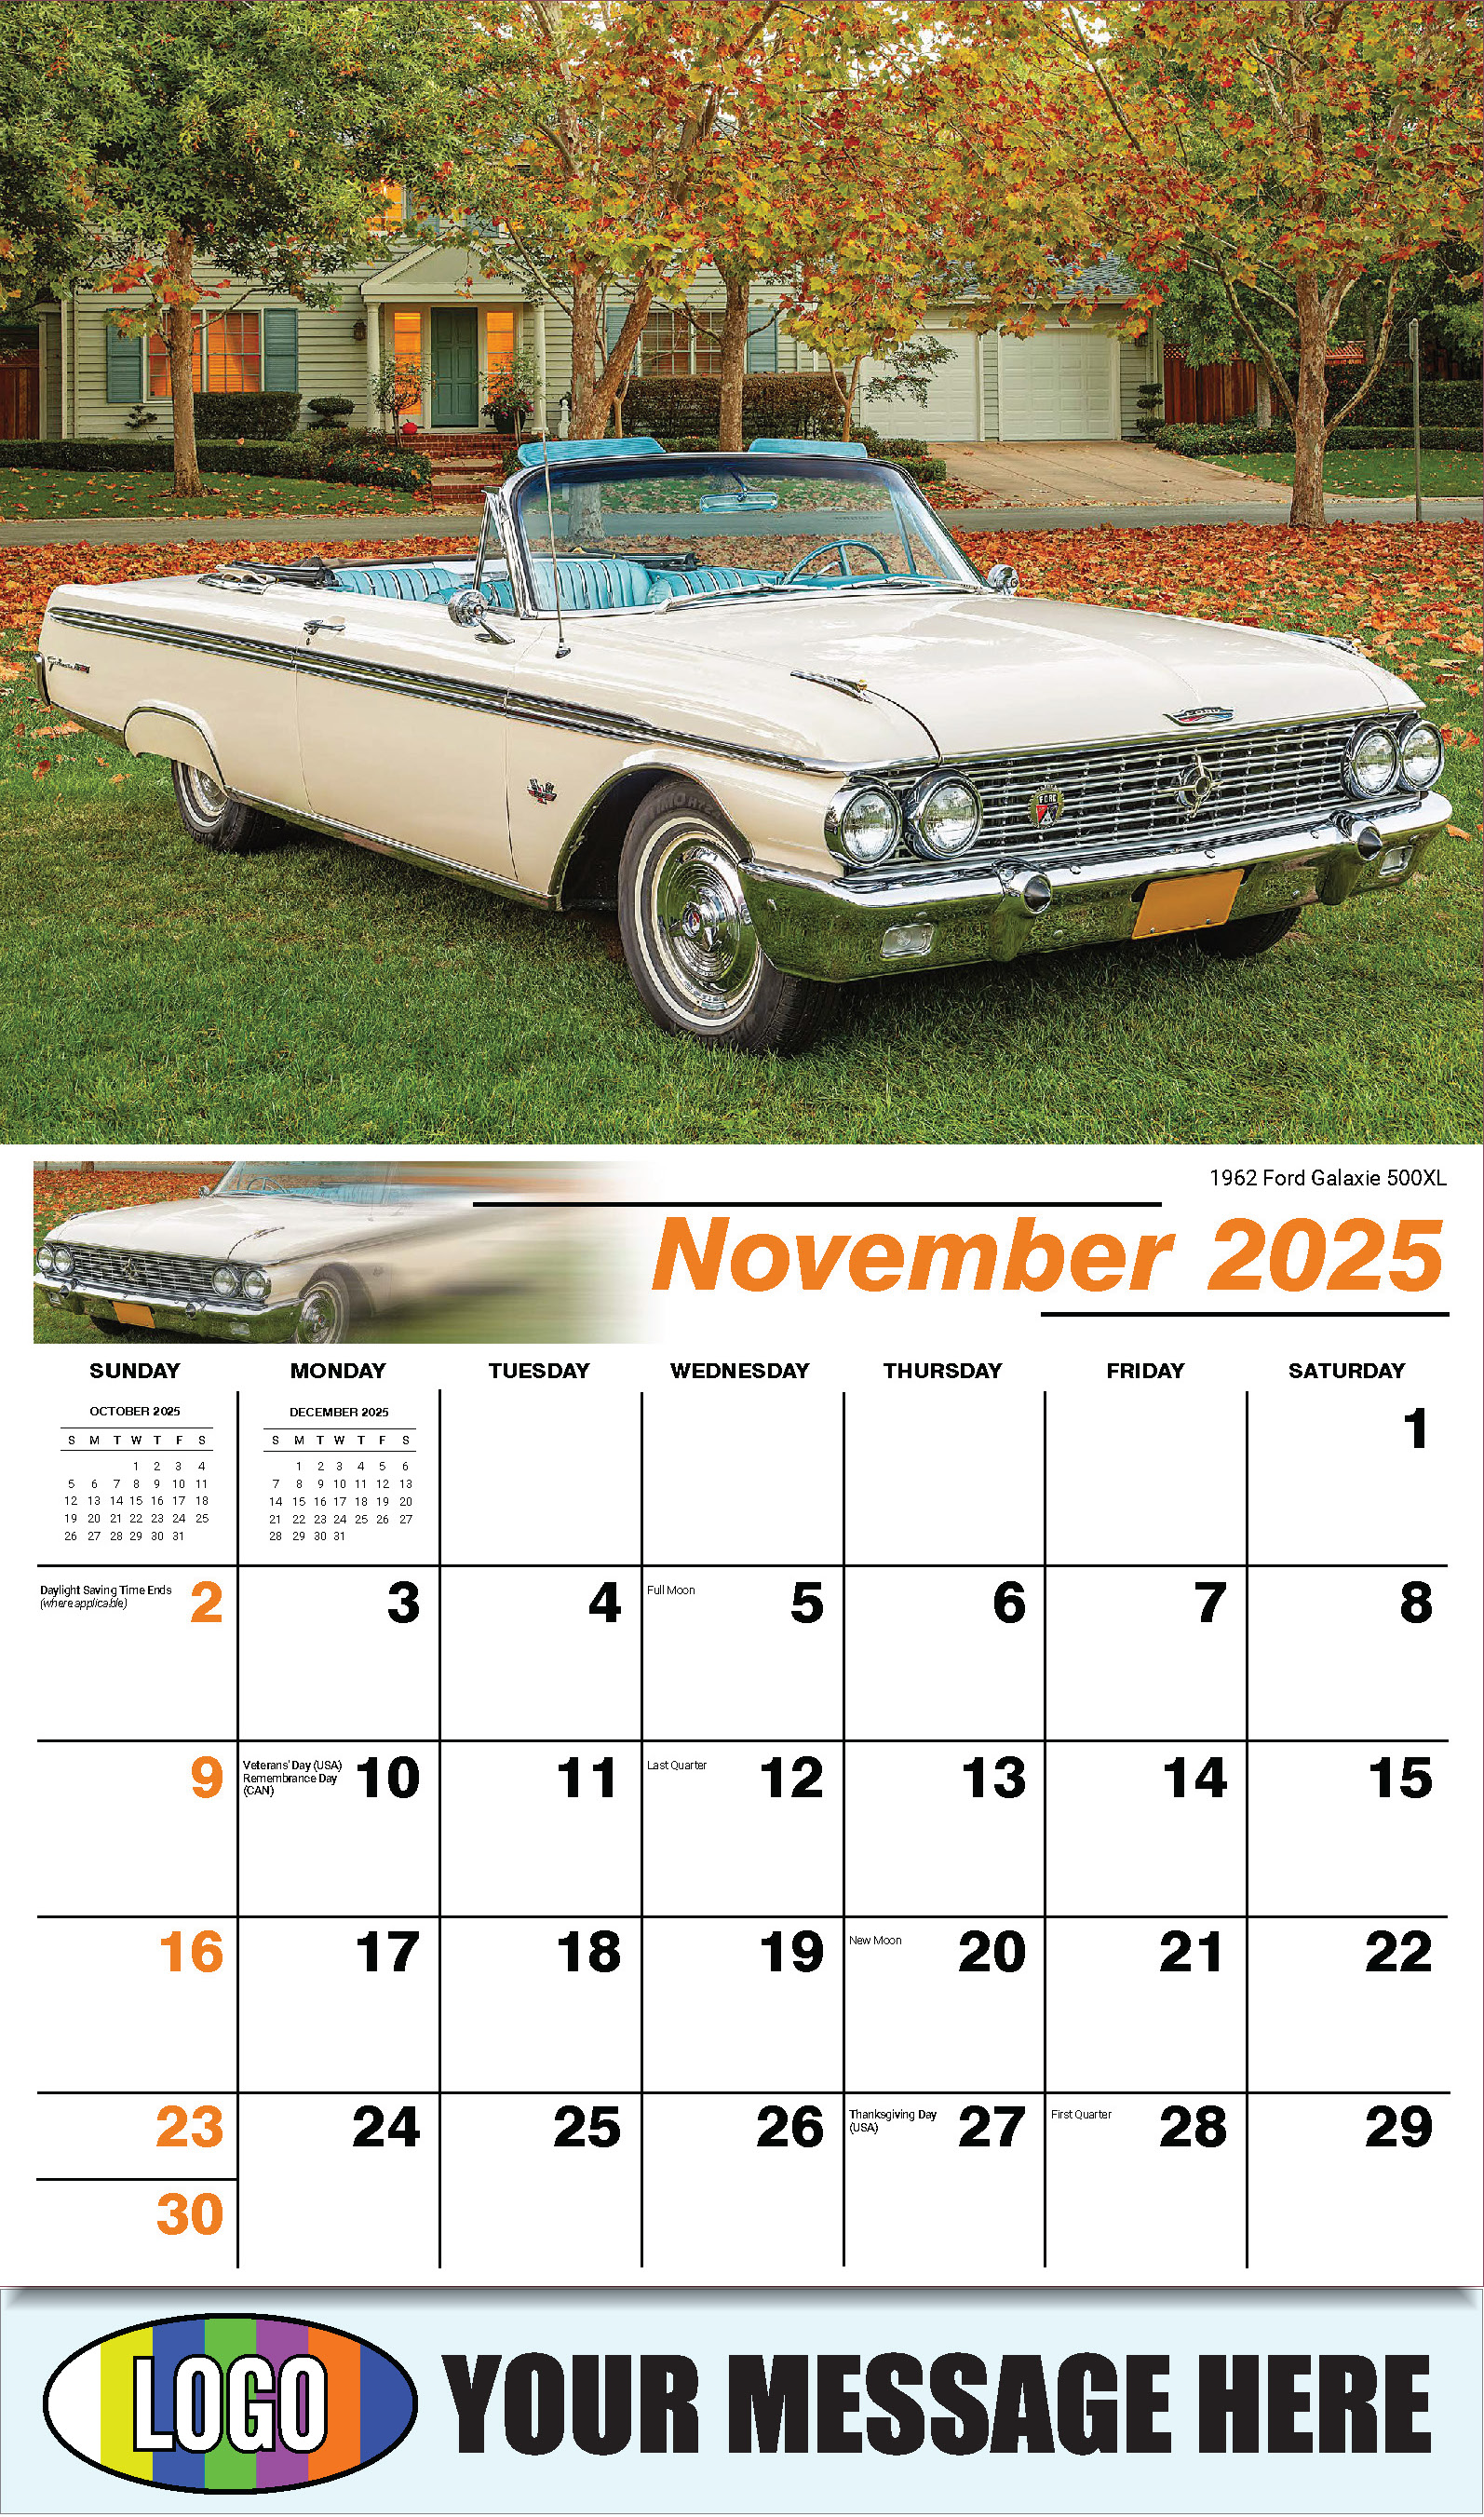 Henry's Heritage FORD Cars 2025 Automotive Business Promo Calendar - November